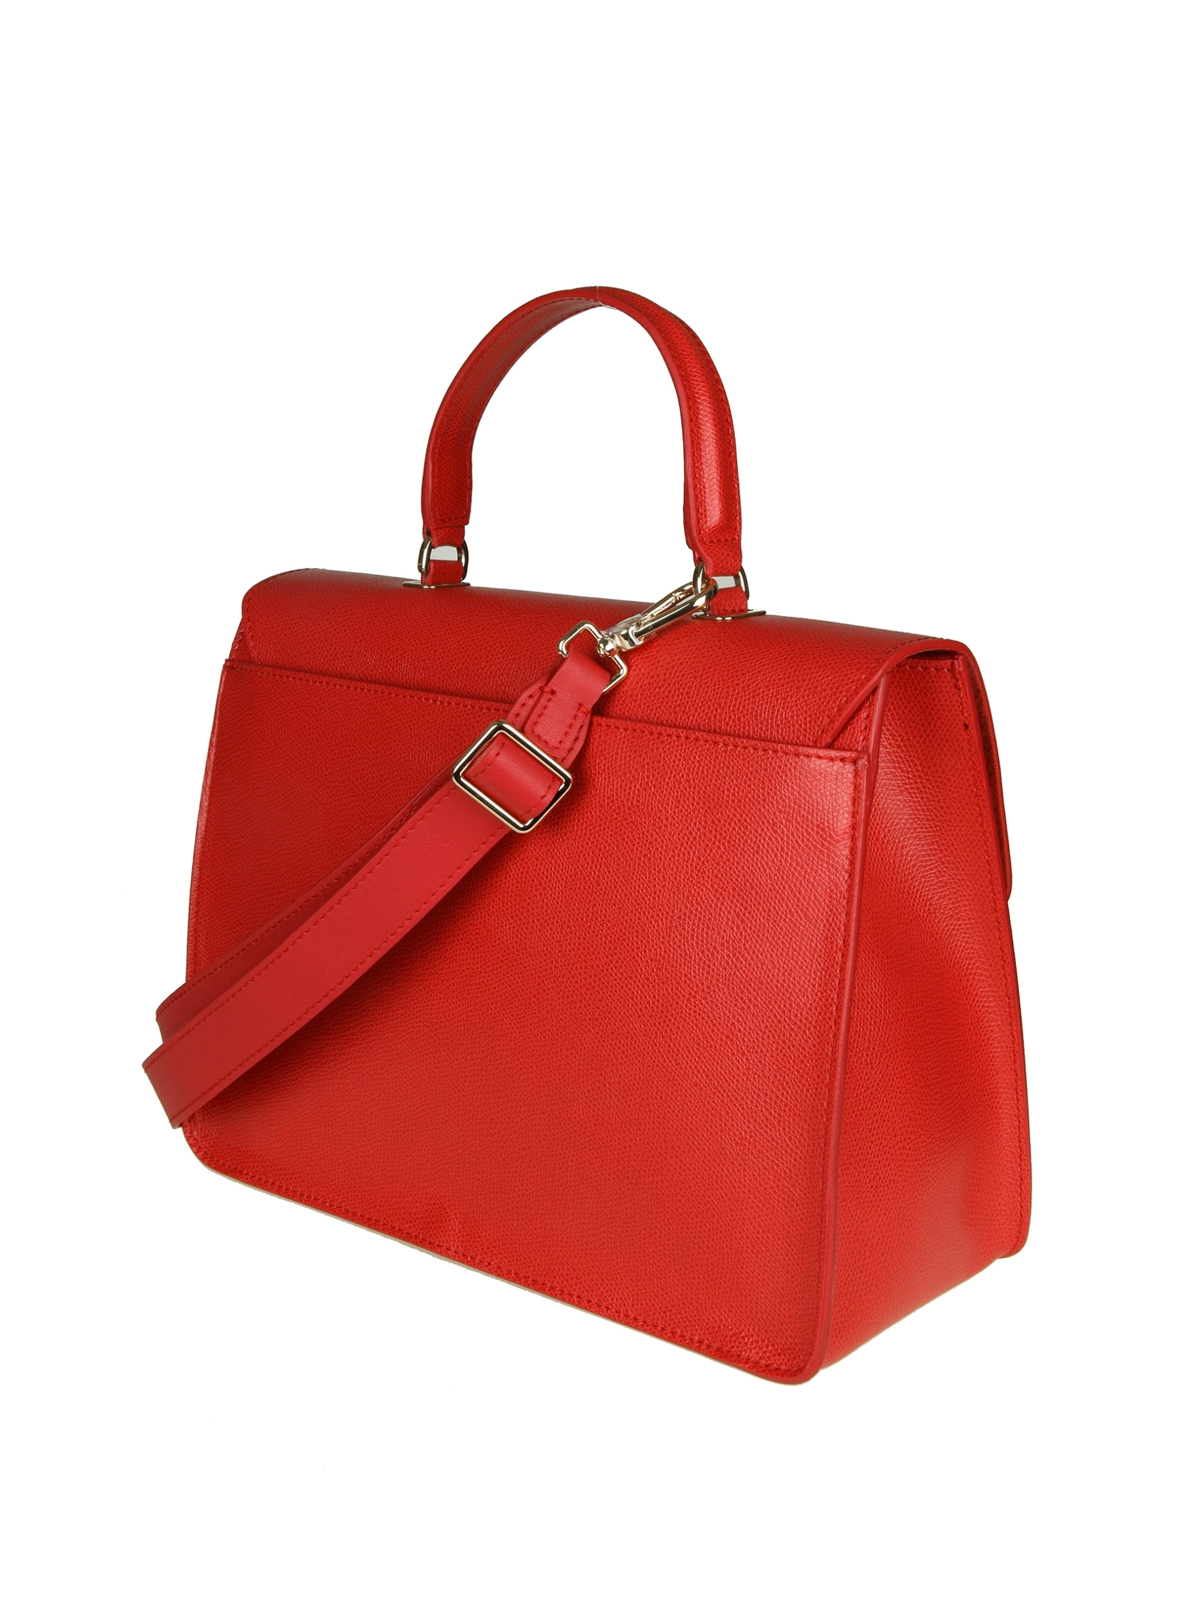 Buy the Tory Burch Nylon Ella Tote Bag Ruby Red